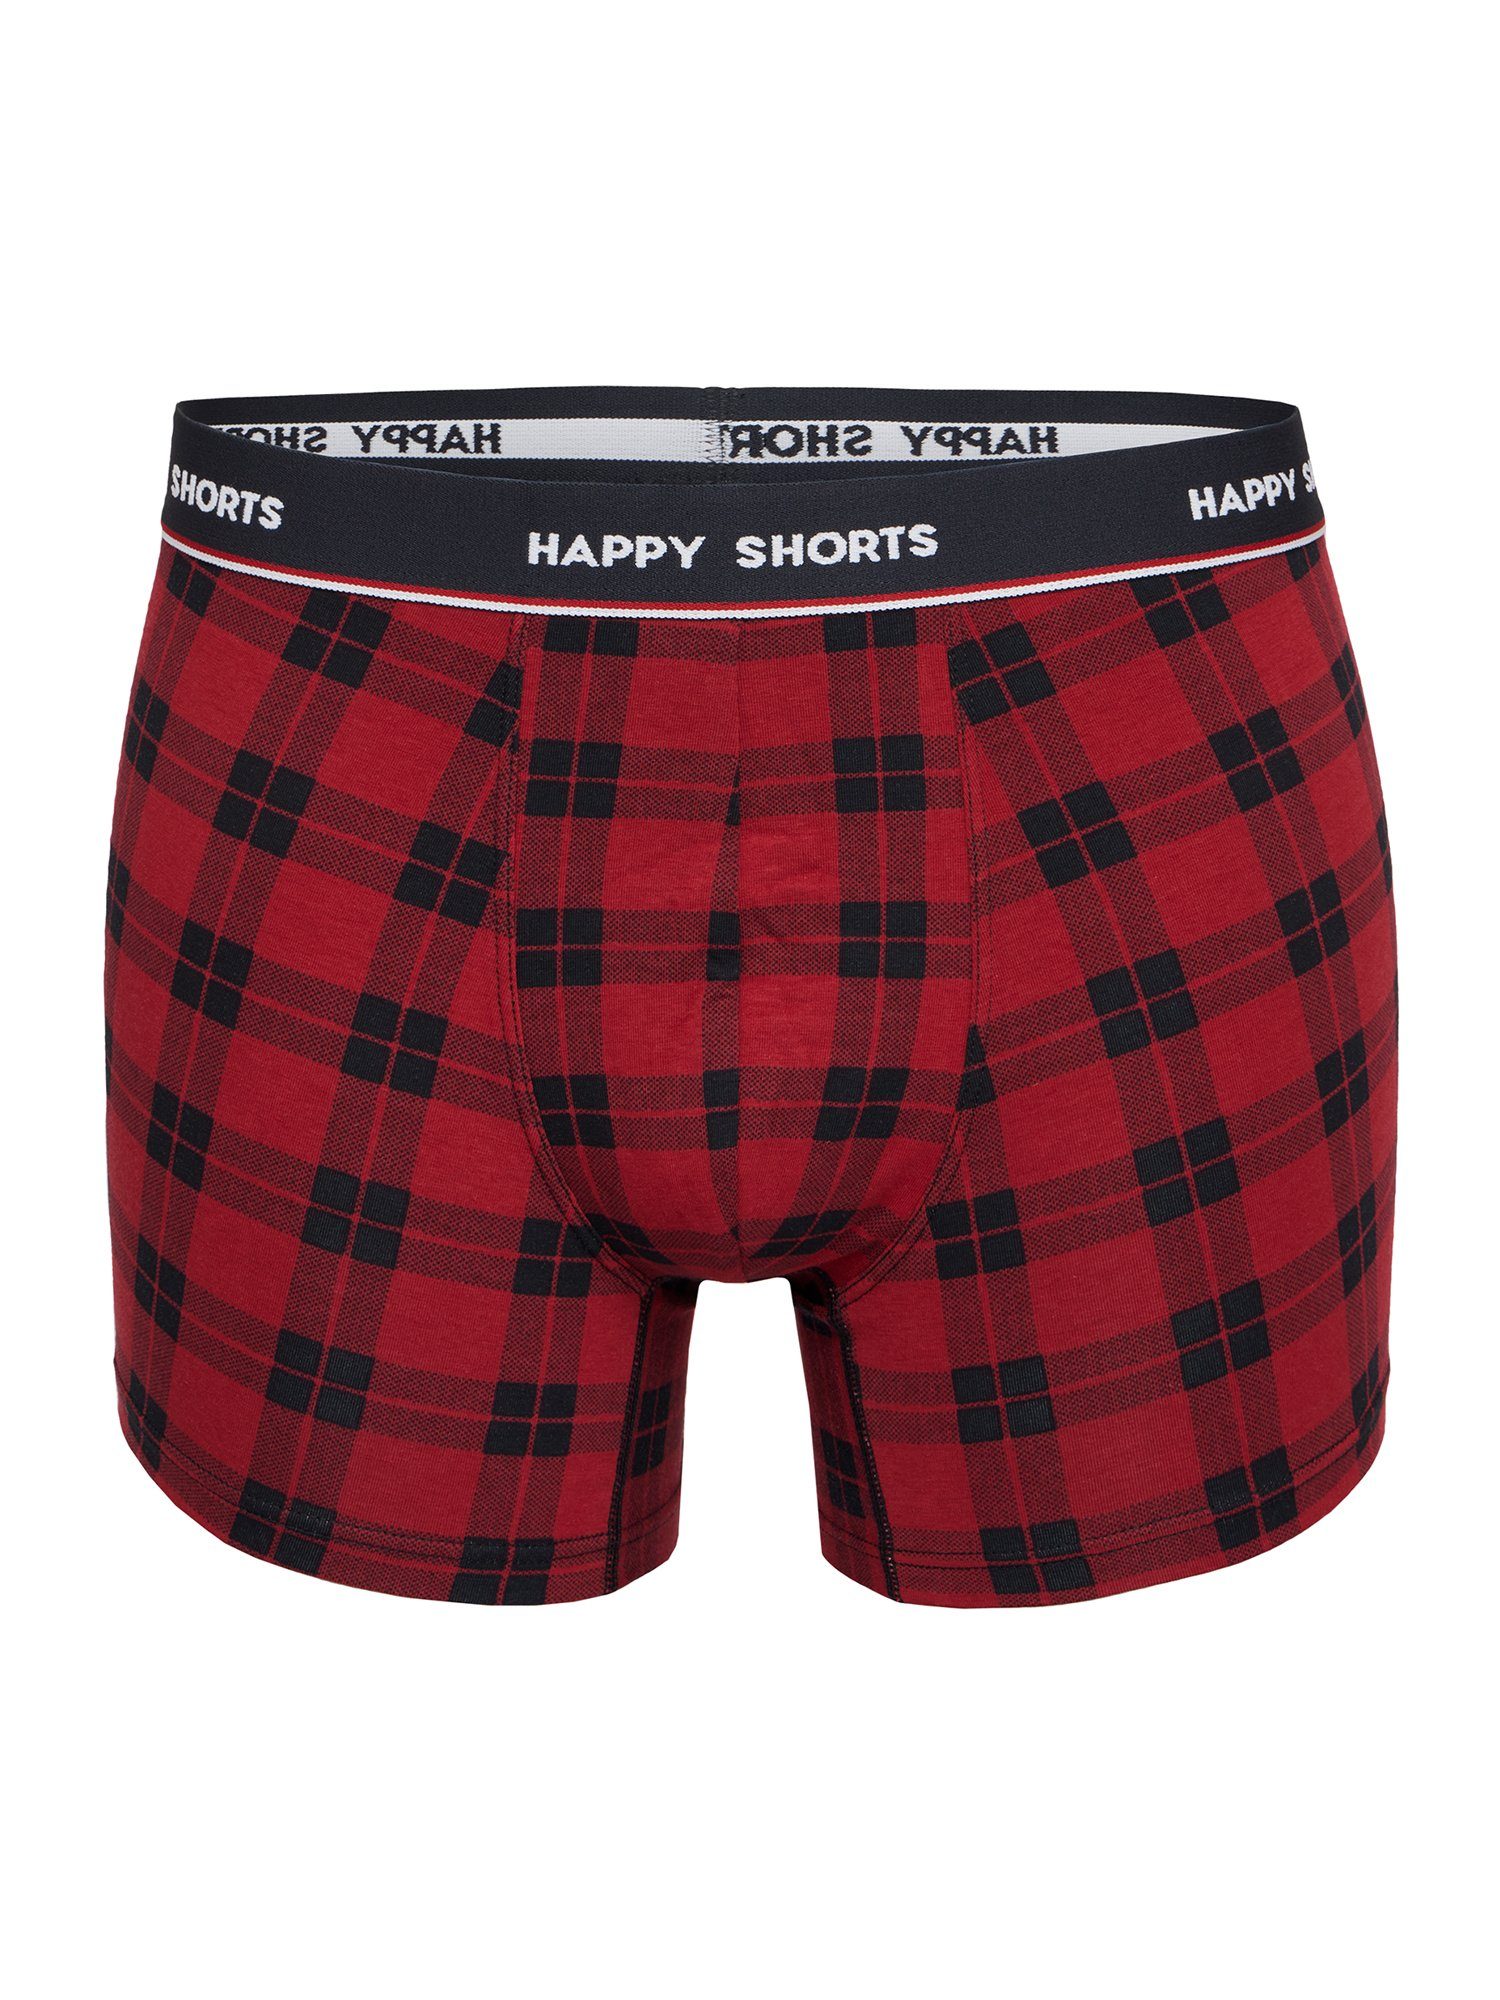 Retro Retro-shorts Pants HAPPY SHORTS (2-St) Trunks Check unterhose Retro-Boxer